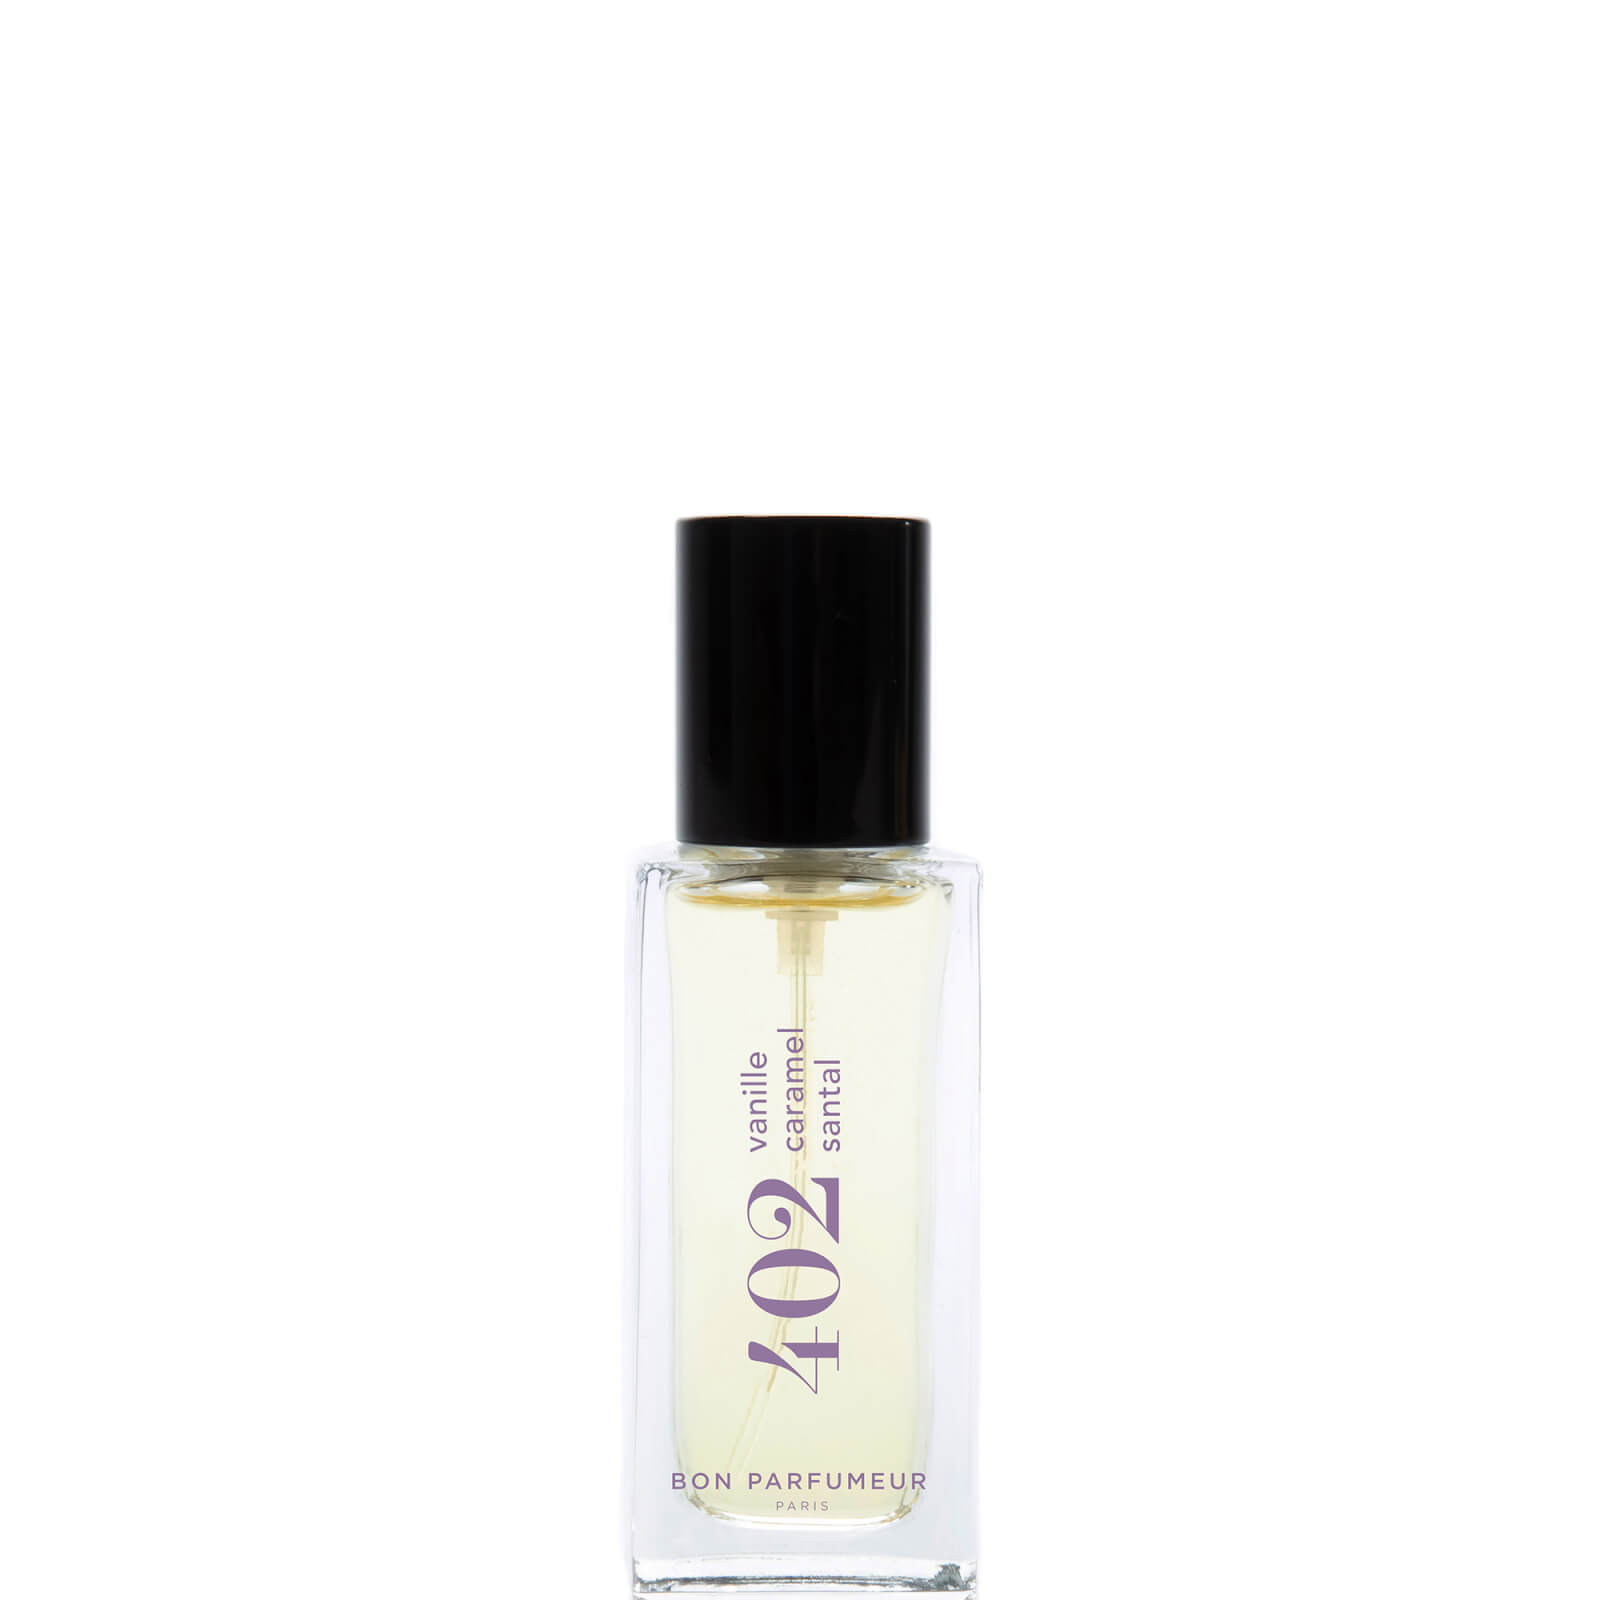 Photos - Women's Fragrance Bon Parfumeur 402 Vanilla Toffee Sandalwood Eau de Parfum - 15ml BP402EDP1 